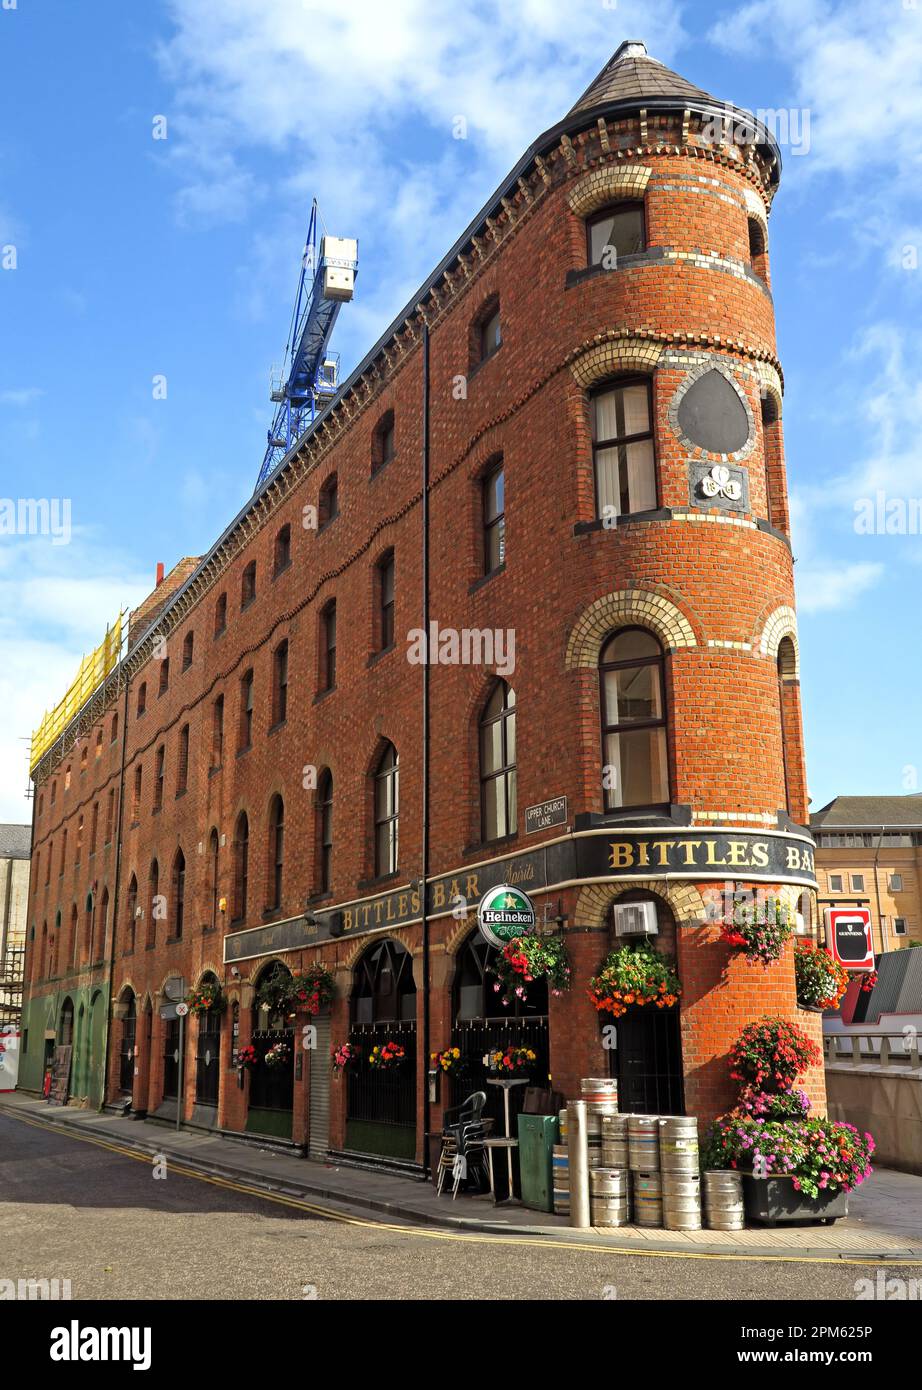 The Historic Flat-Iron Bittles Bar, 70 Upper Church Lane, Belfast, Irlande du Nord, Royaume-Uni, BT1 4QL Banque D'Images